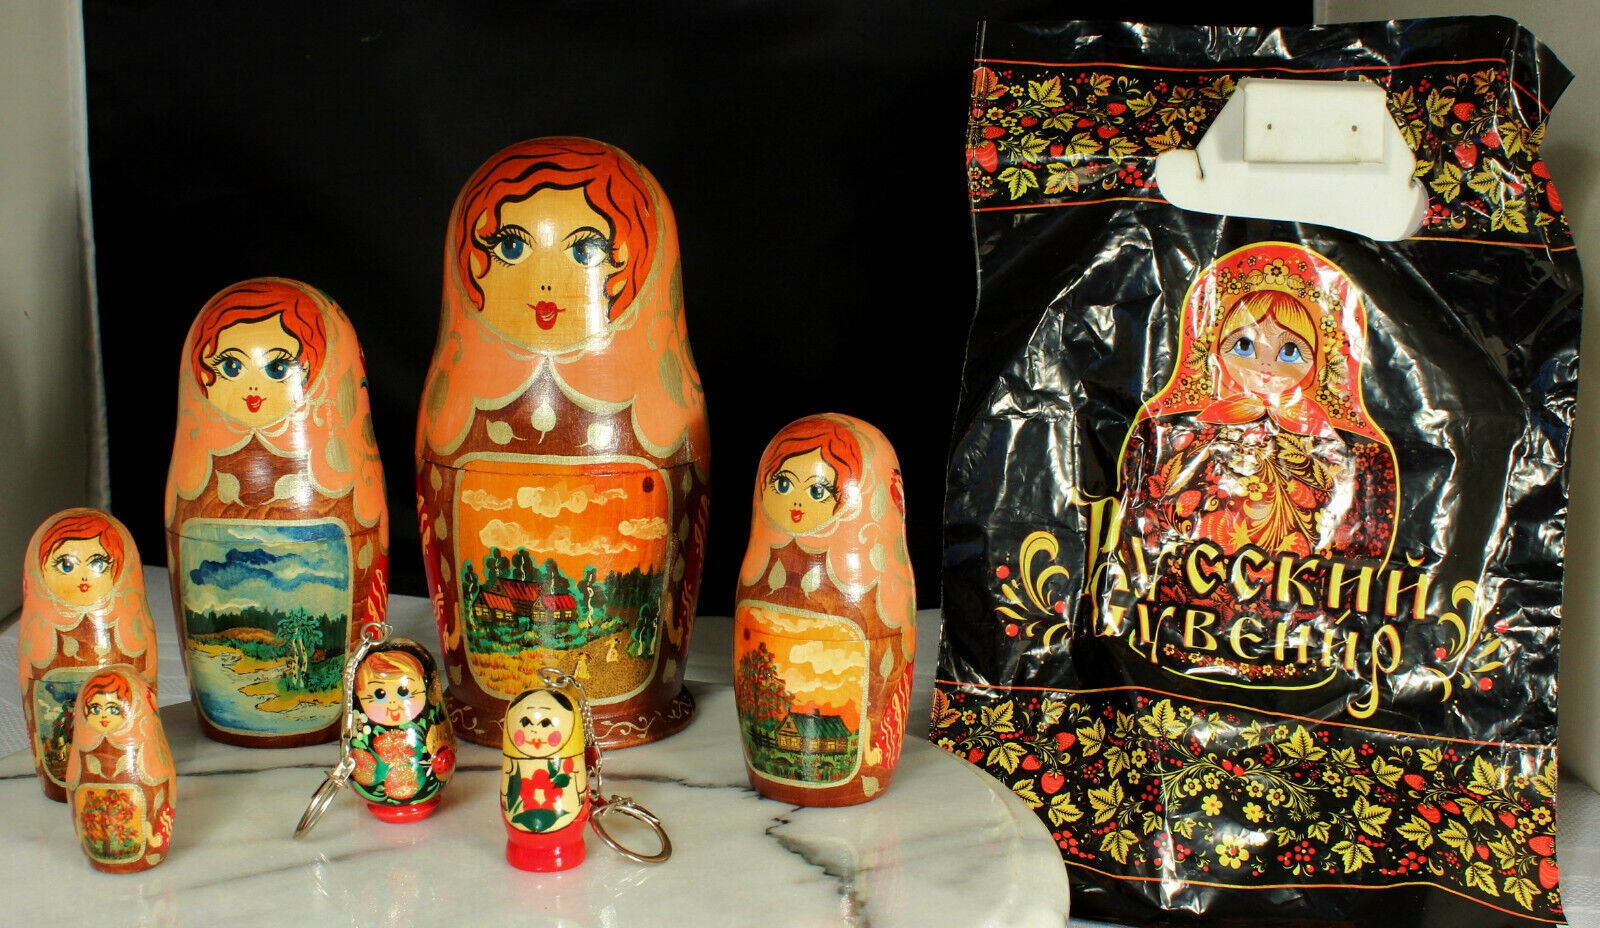 MOSCOW Matryoshka NESTING DOLLS 1991 Artist Signed + RUSSIAN Doll Key Rings WOOD Russian Artist